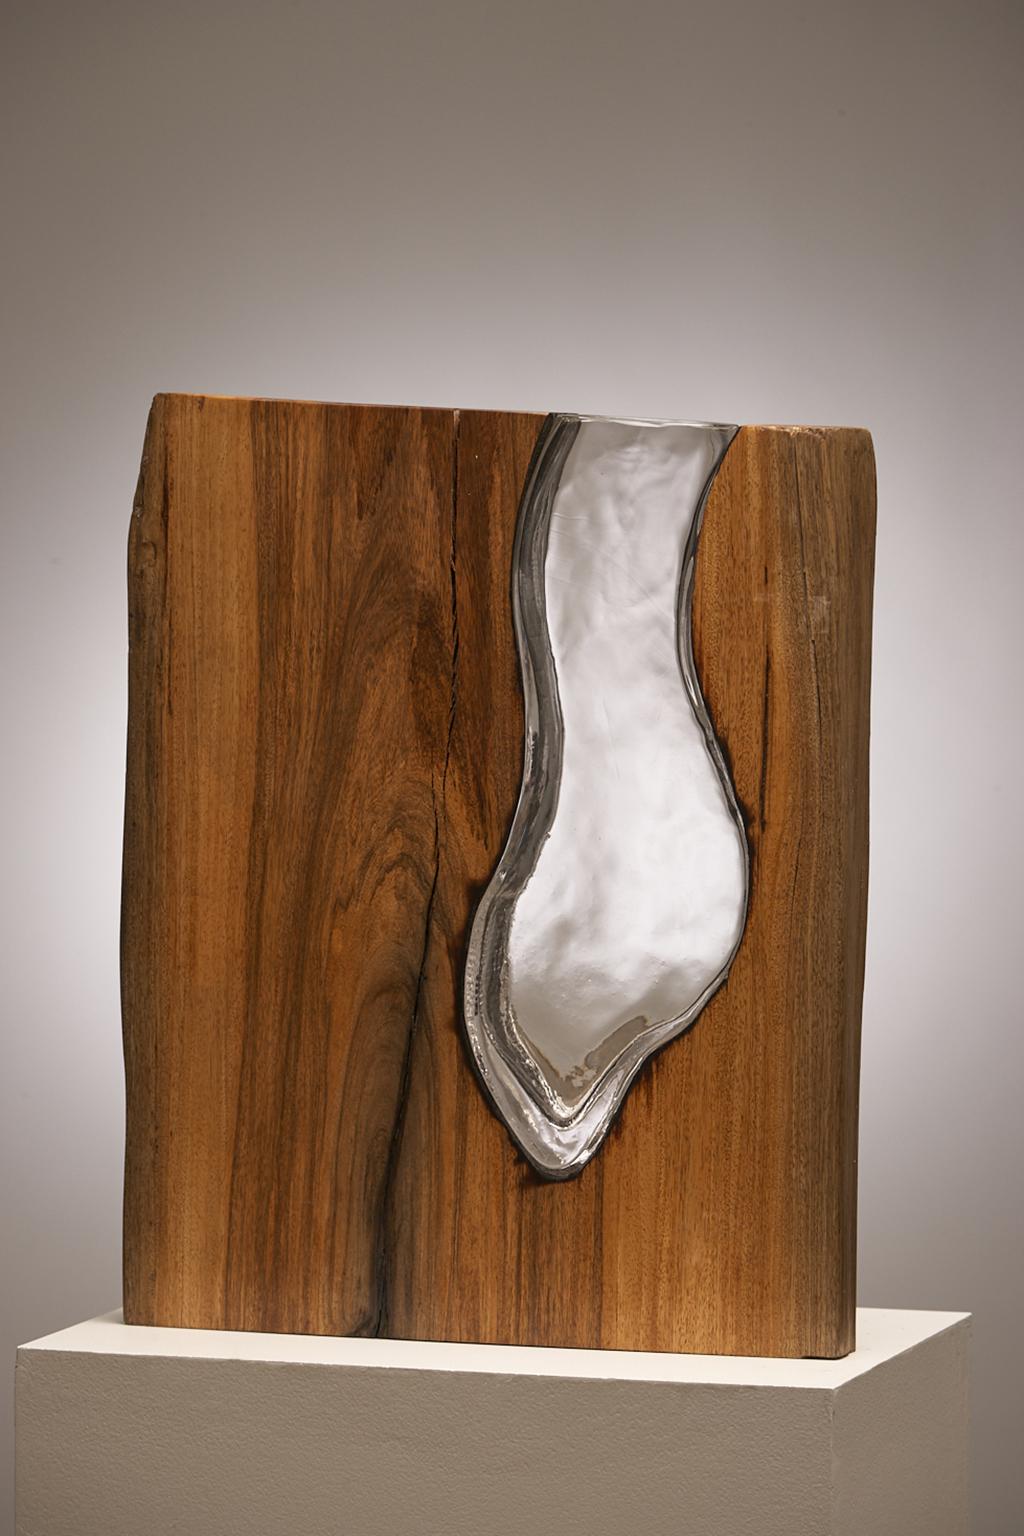 Hand Blown Clear Glass with Live Edge Wood Vase Sculpture, Scott Slagerman - Mixed Media Art by Scott Slagerman / Jim Fishman